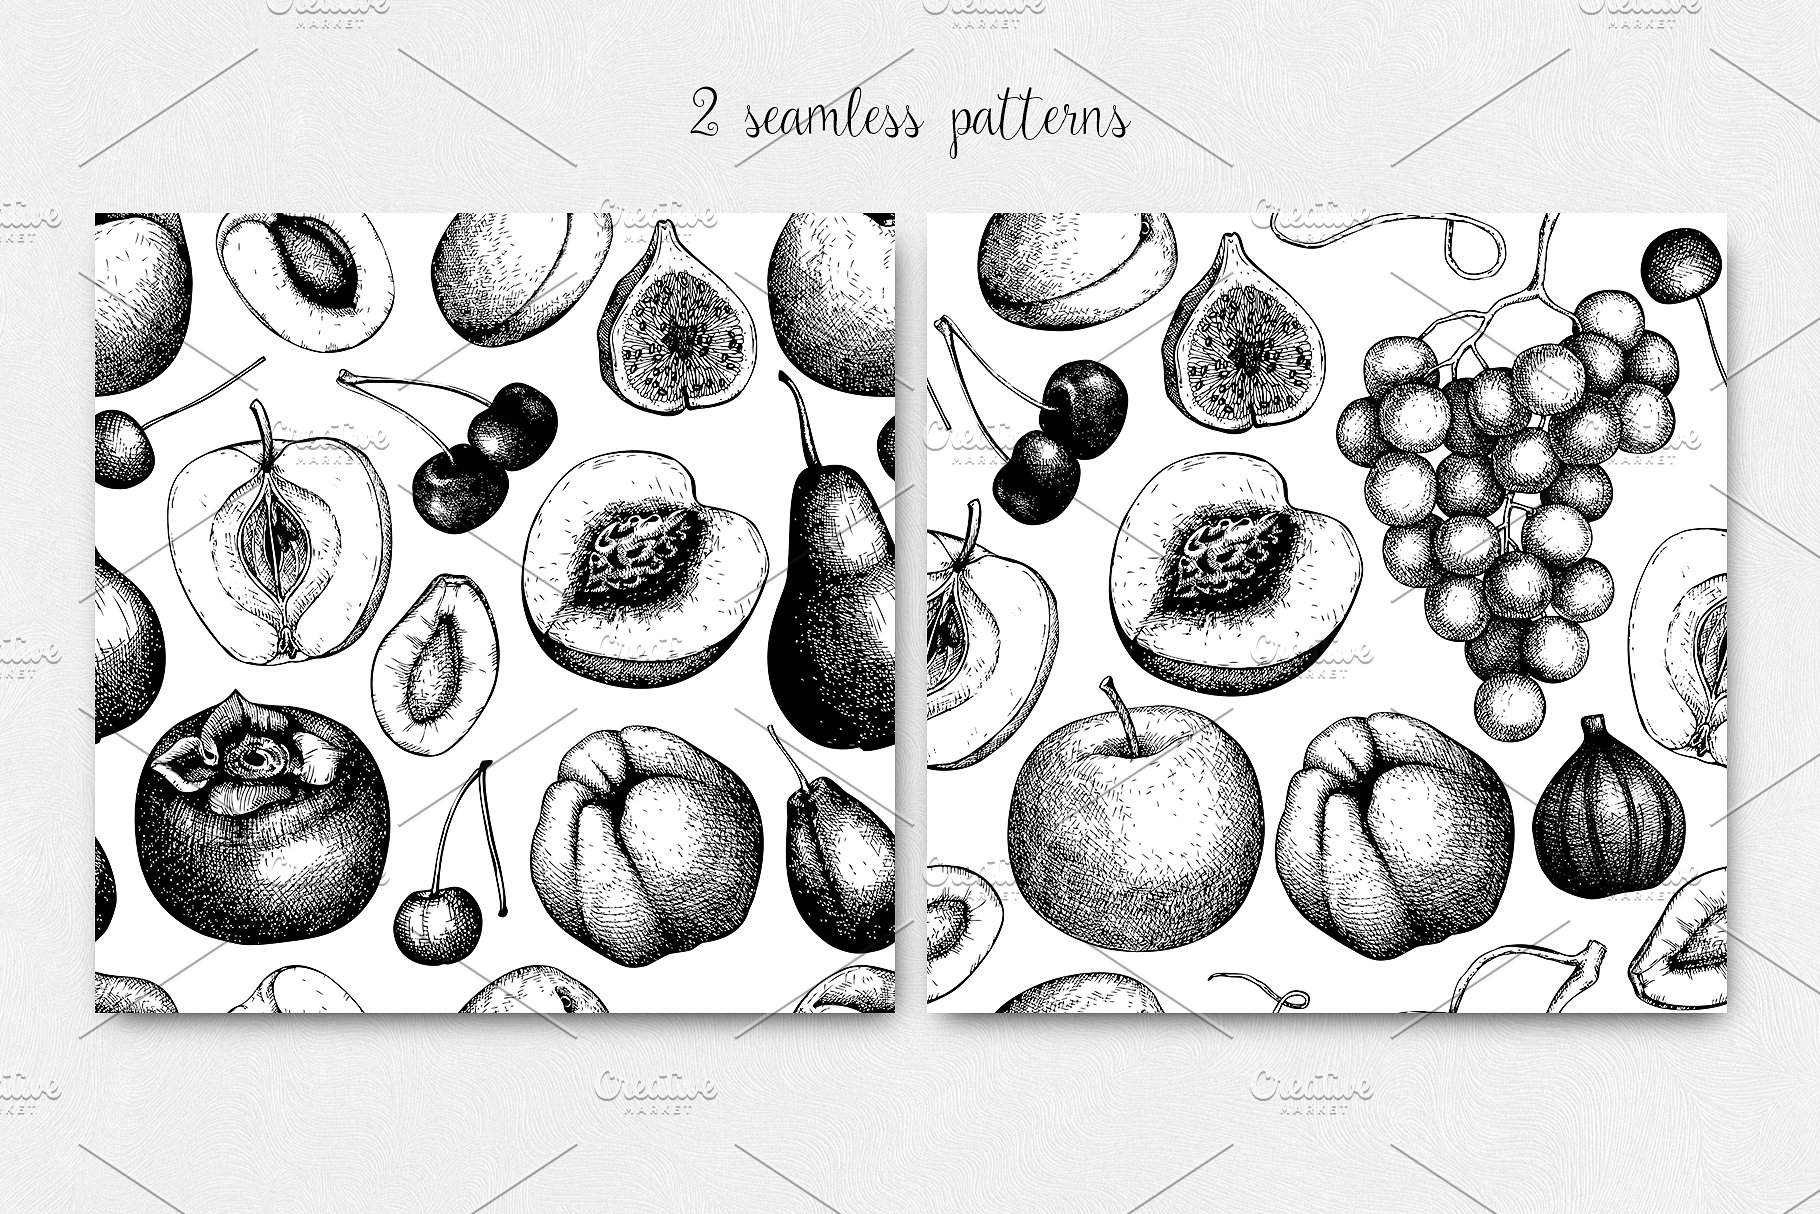 墨水手绘水果素材合集 Ink hand drawn fruit collection插图(4)